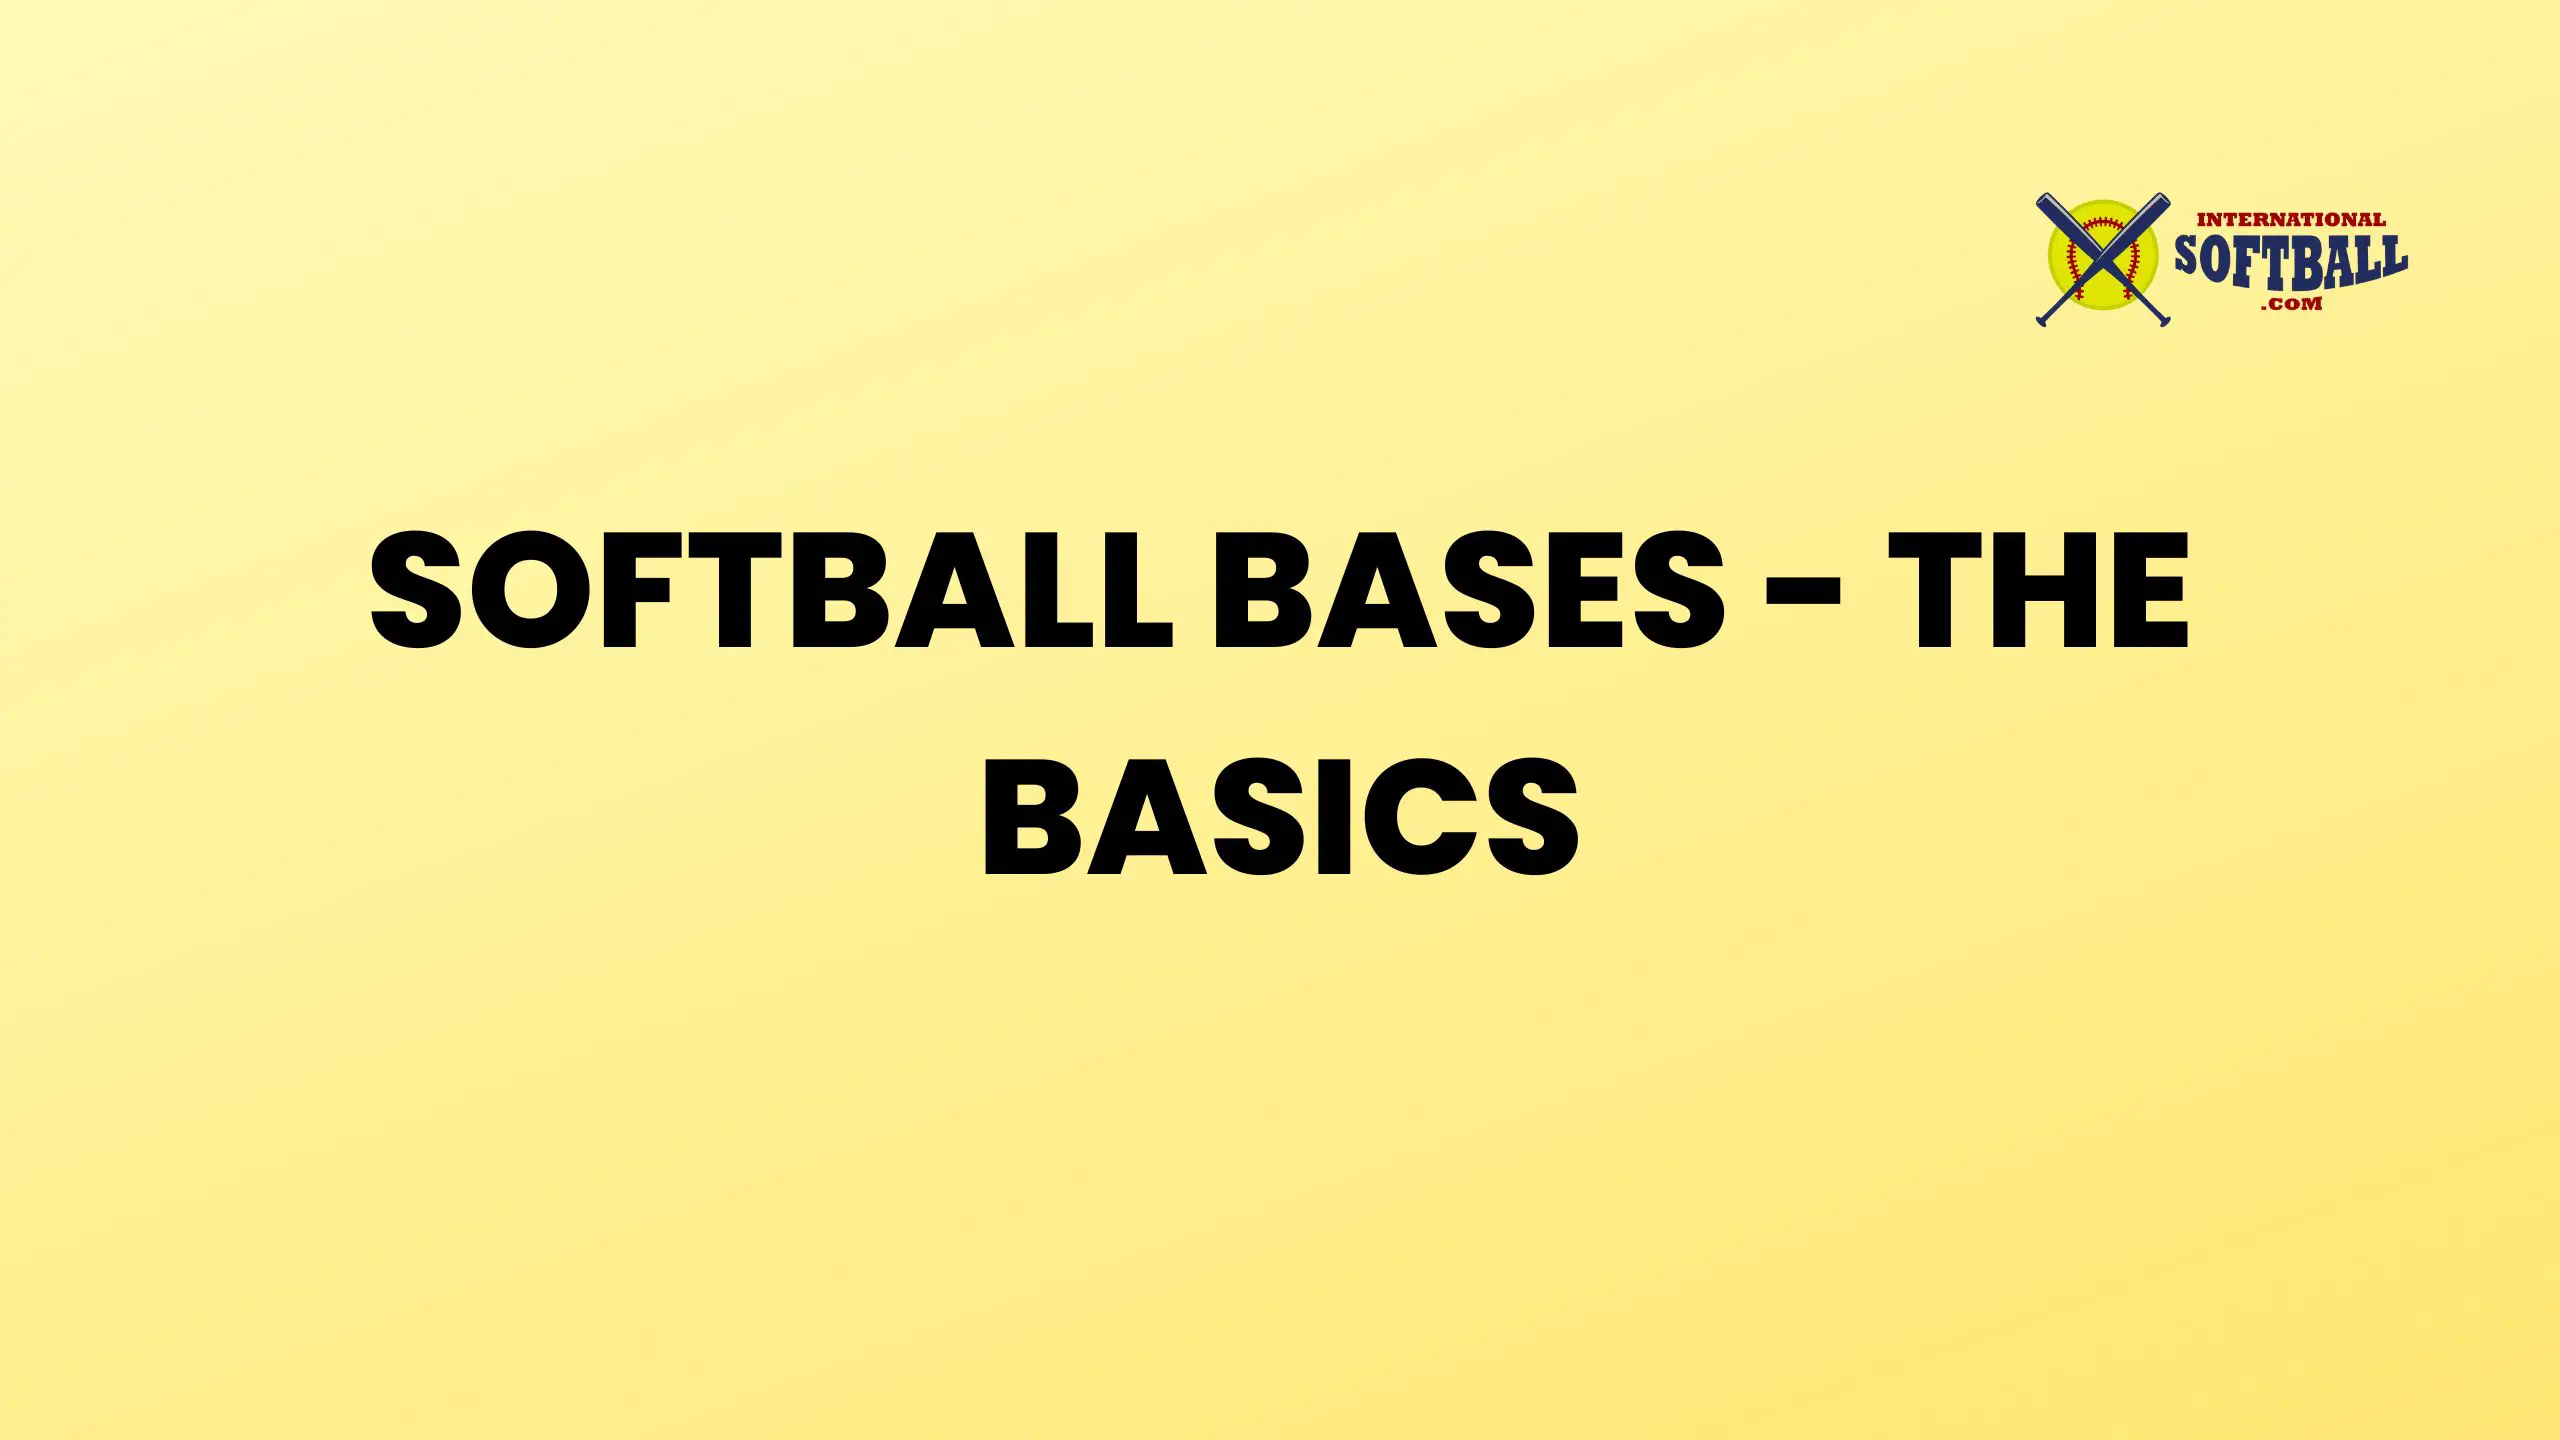 SOFTBALL BASES - THE BASICS